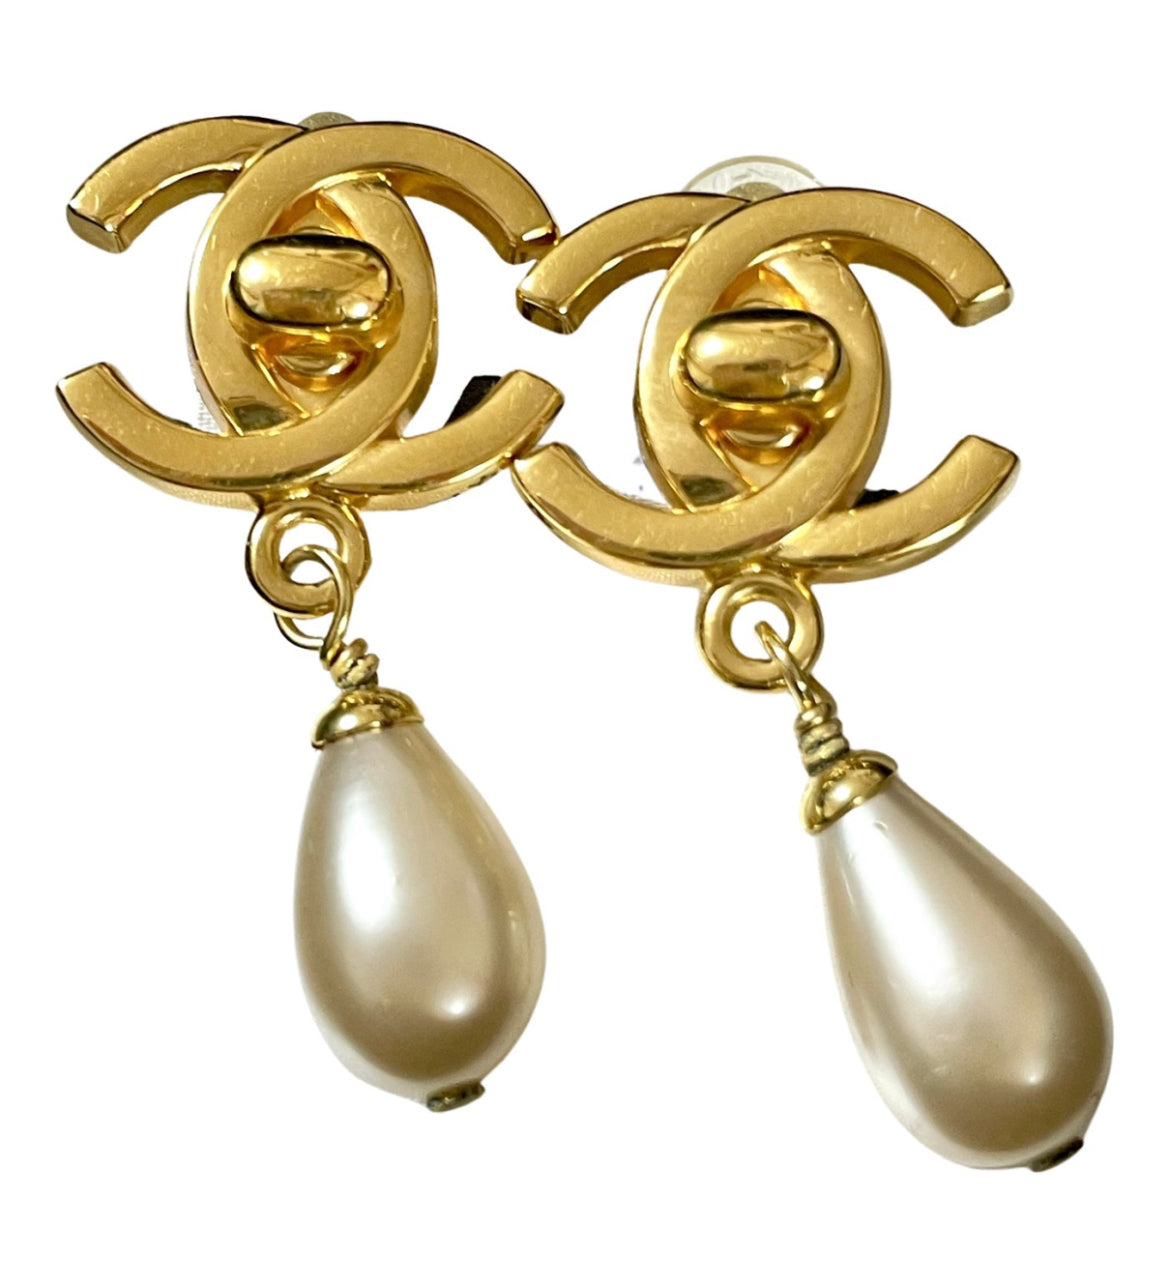 Authentic vintage Chanel earrings turnlock CC logo pearl dangle classy